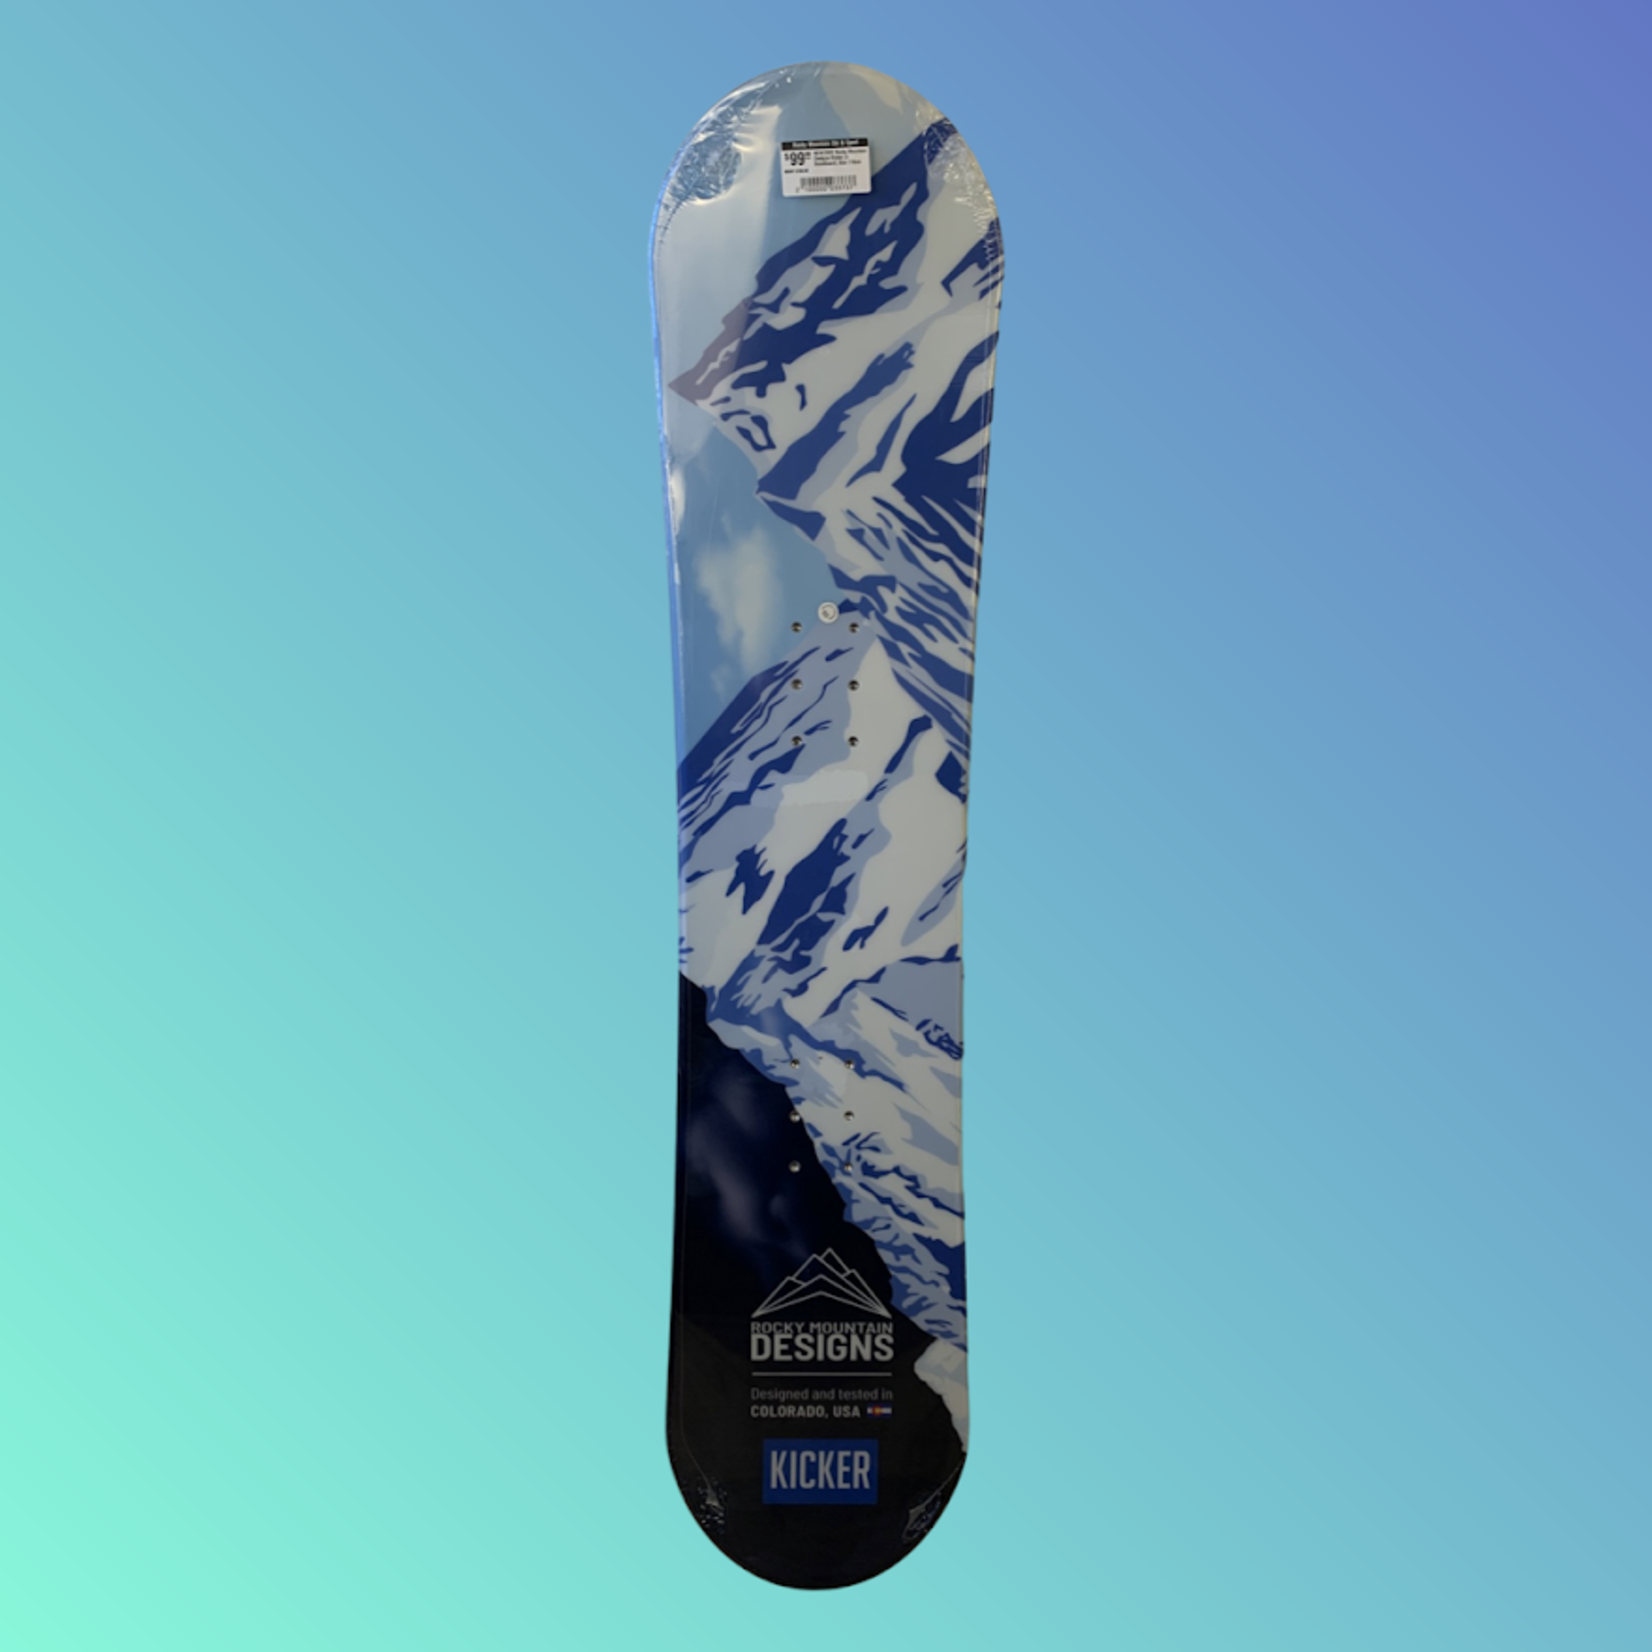 NEW 2022 Rocky Mountain Designs Kicker Jr. Snowboard, Size 80cm